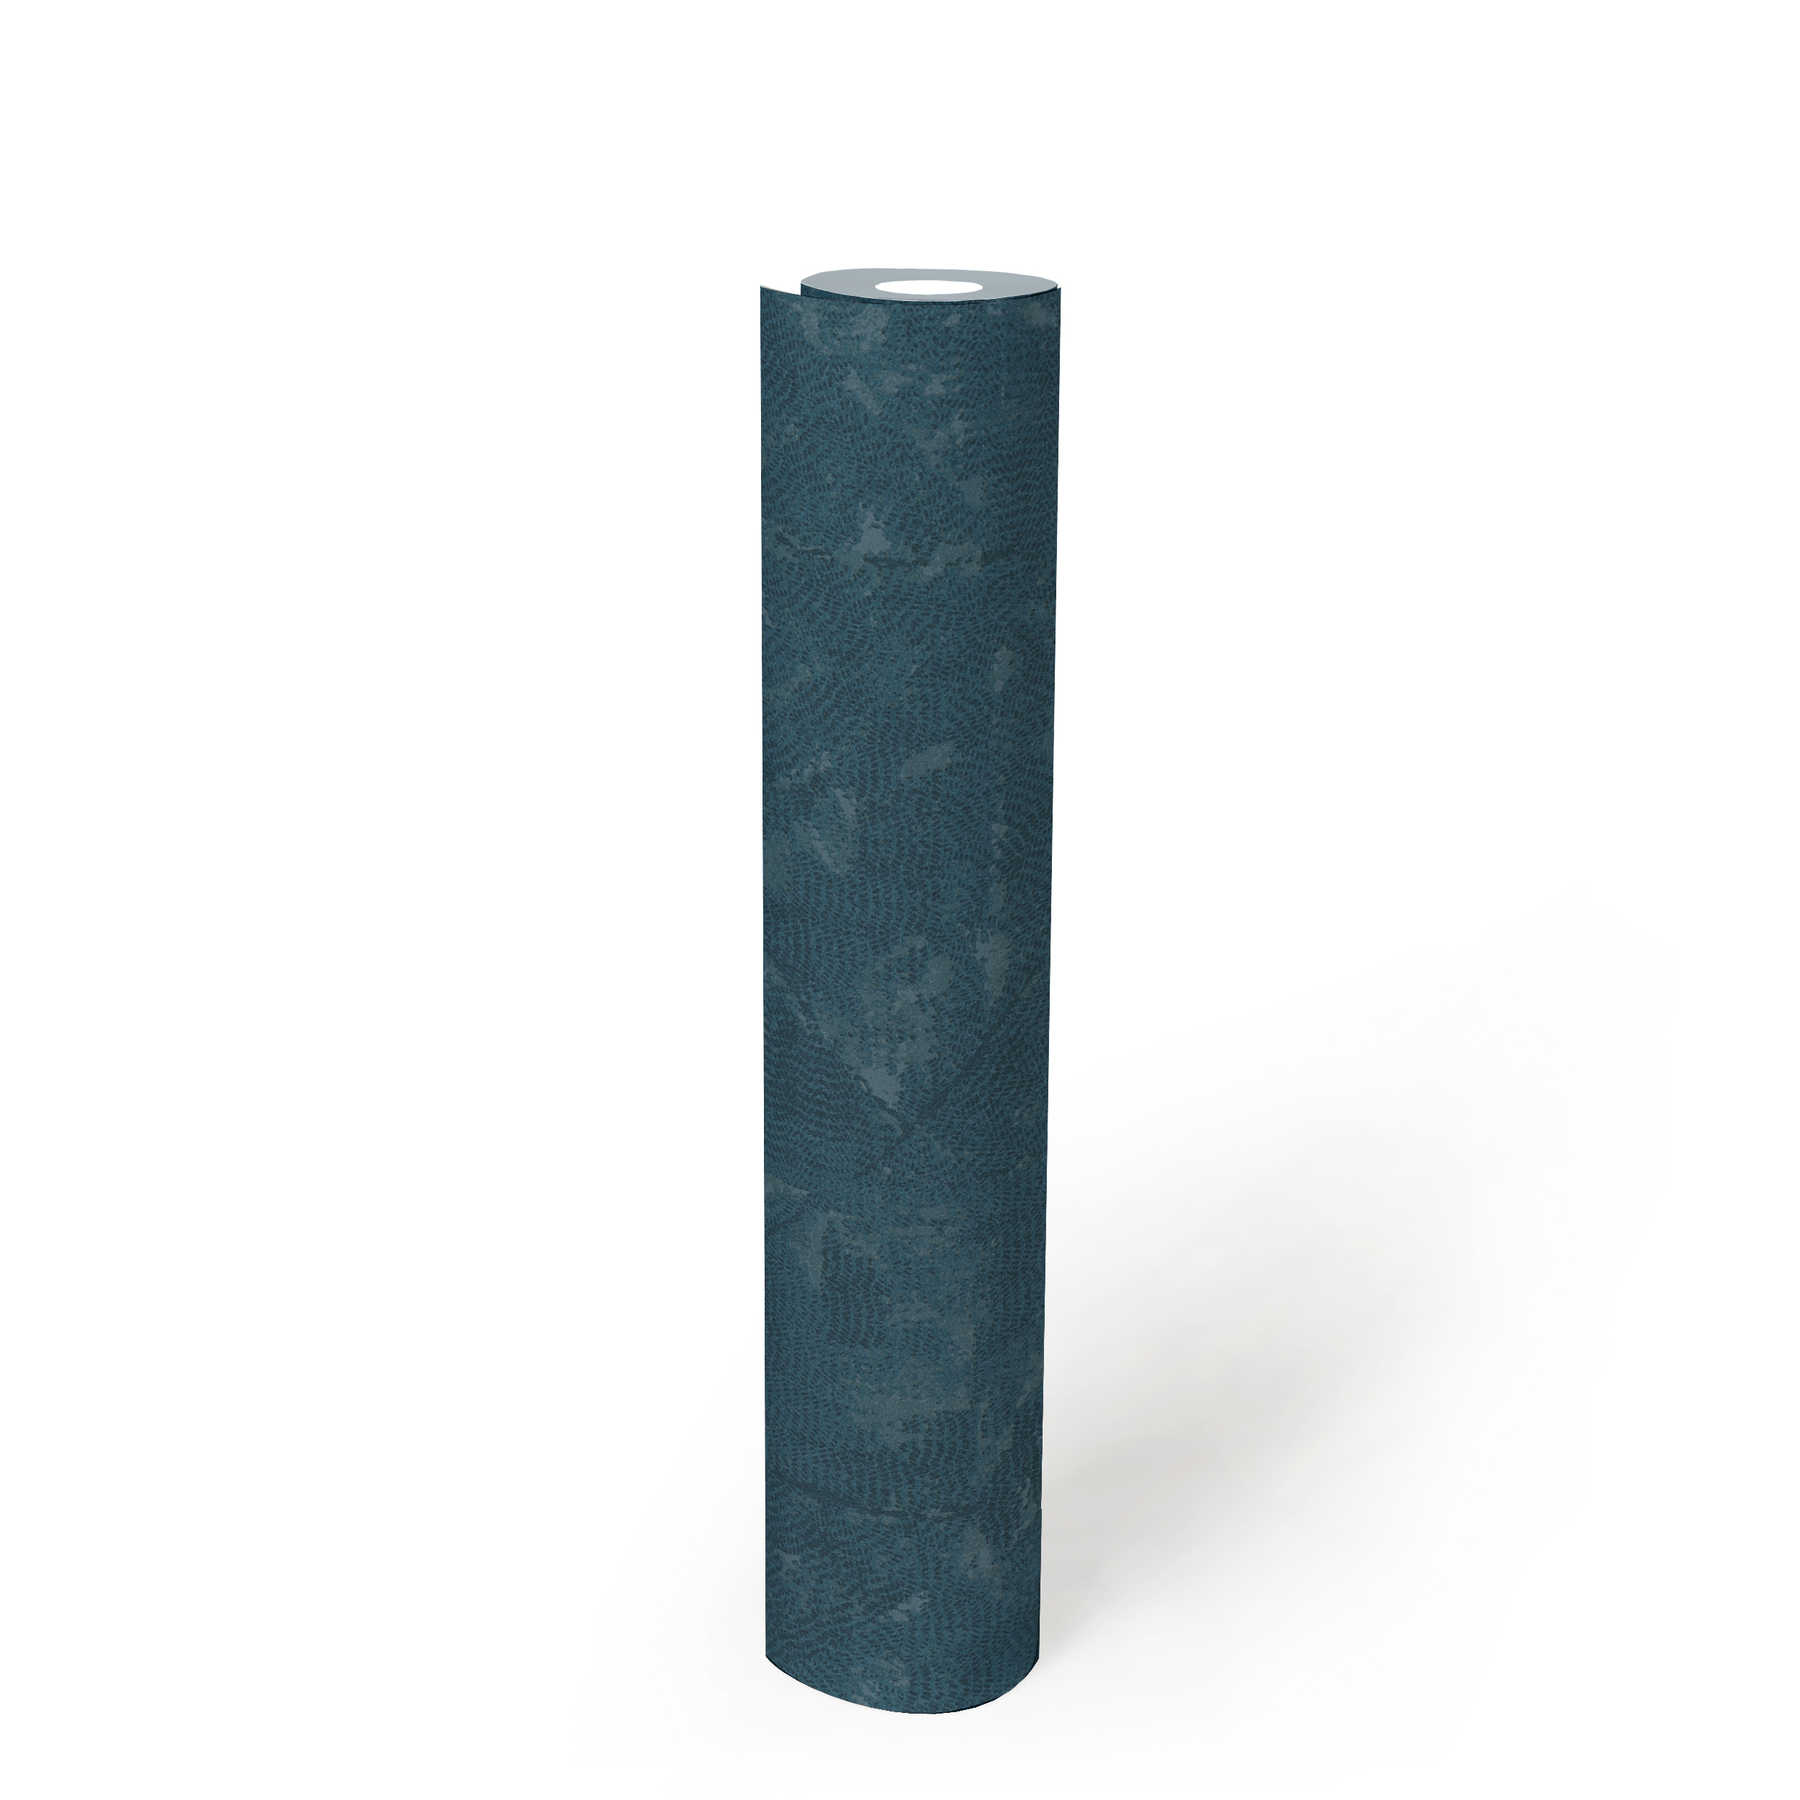             Papel pintado no tejido Petrol con detalles asimétricos - azul, gris
        